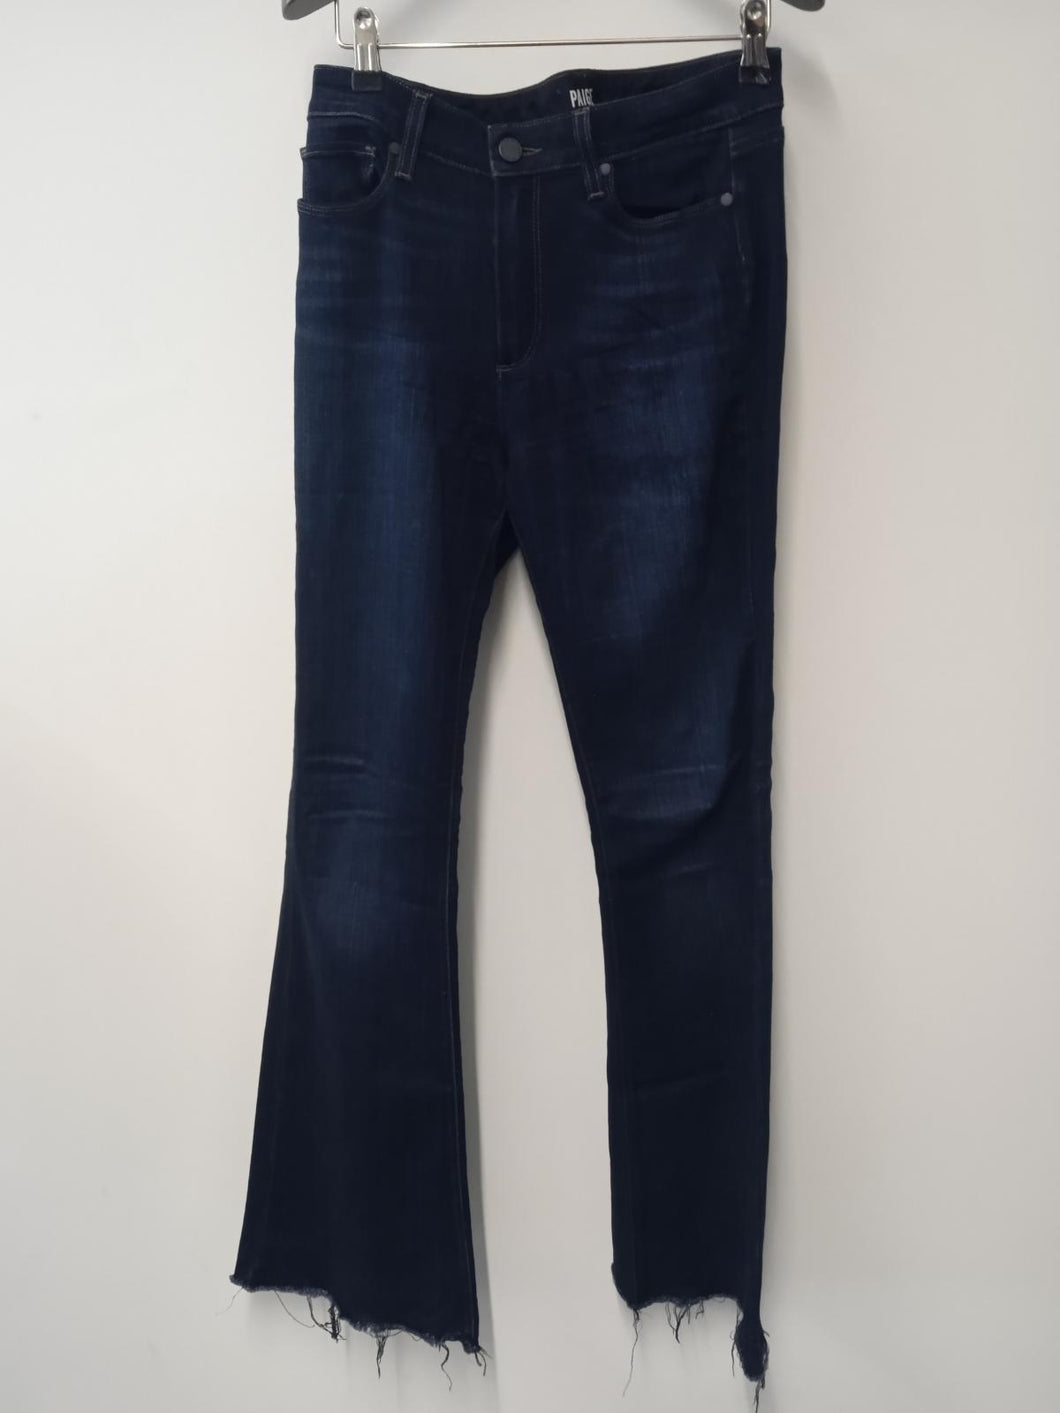 PAIGE Ladies Navy Blue Cotton Zip Fly Skinny Jeans Size W30L33